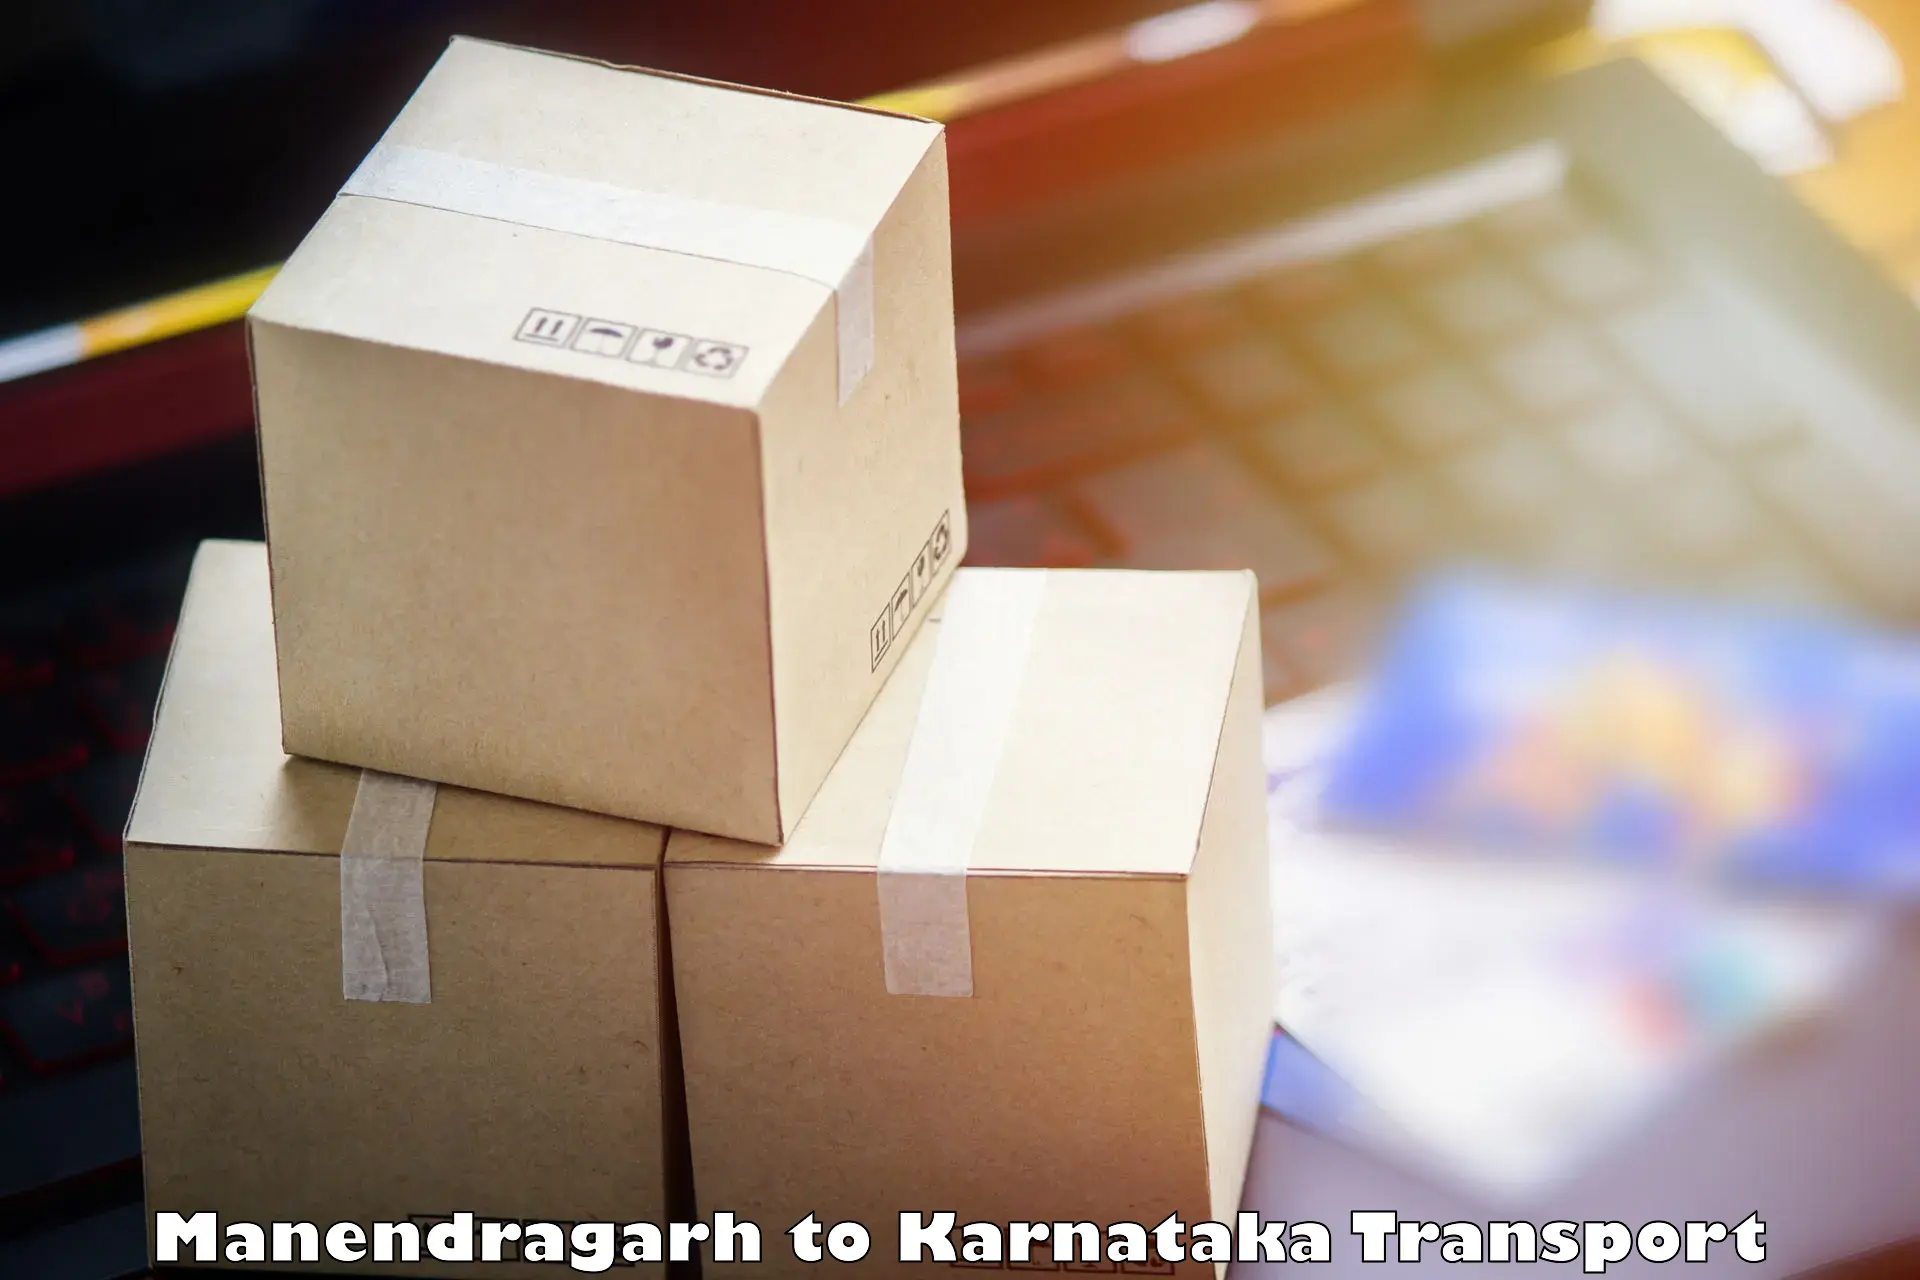 Shipping partner Manendragarh to Hunsur